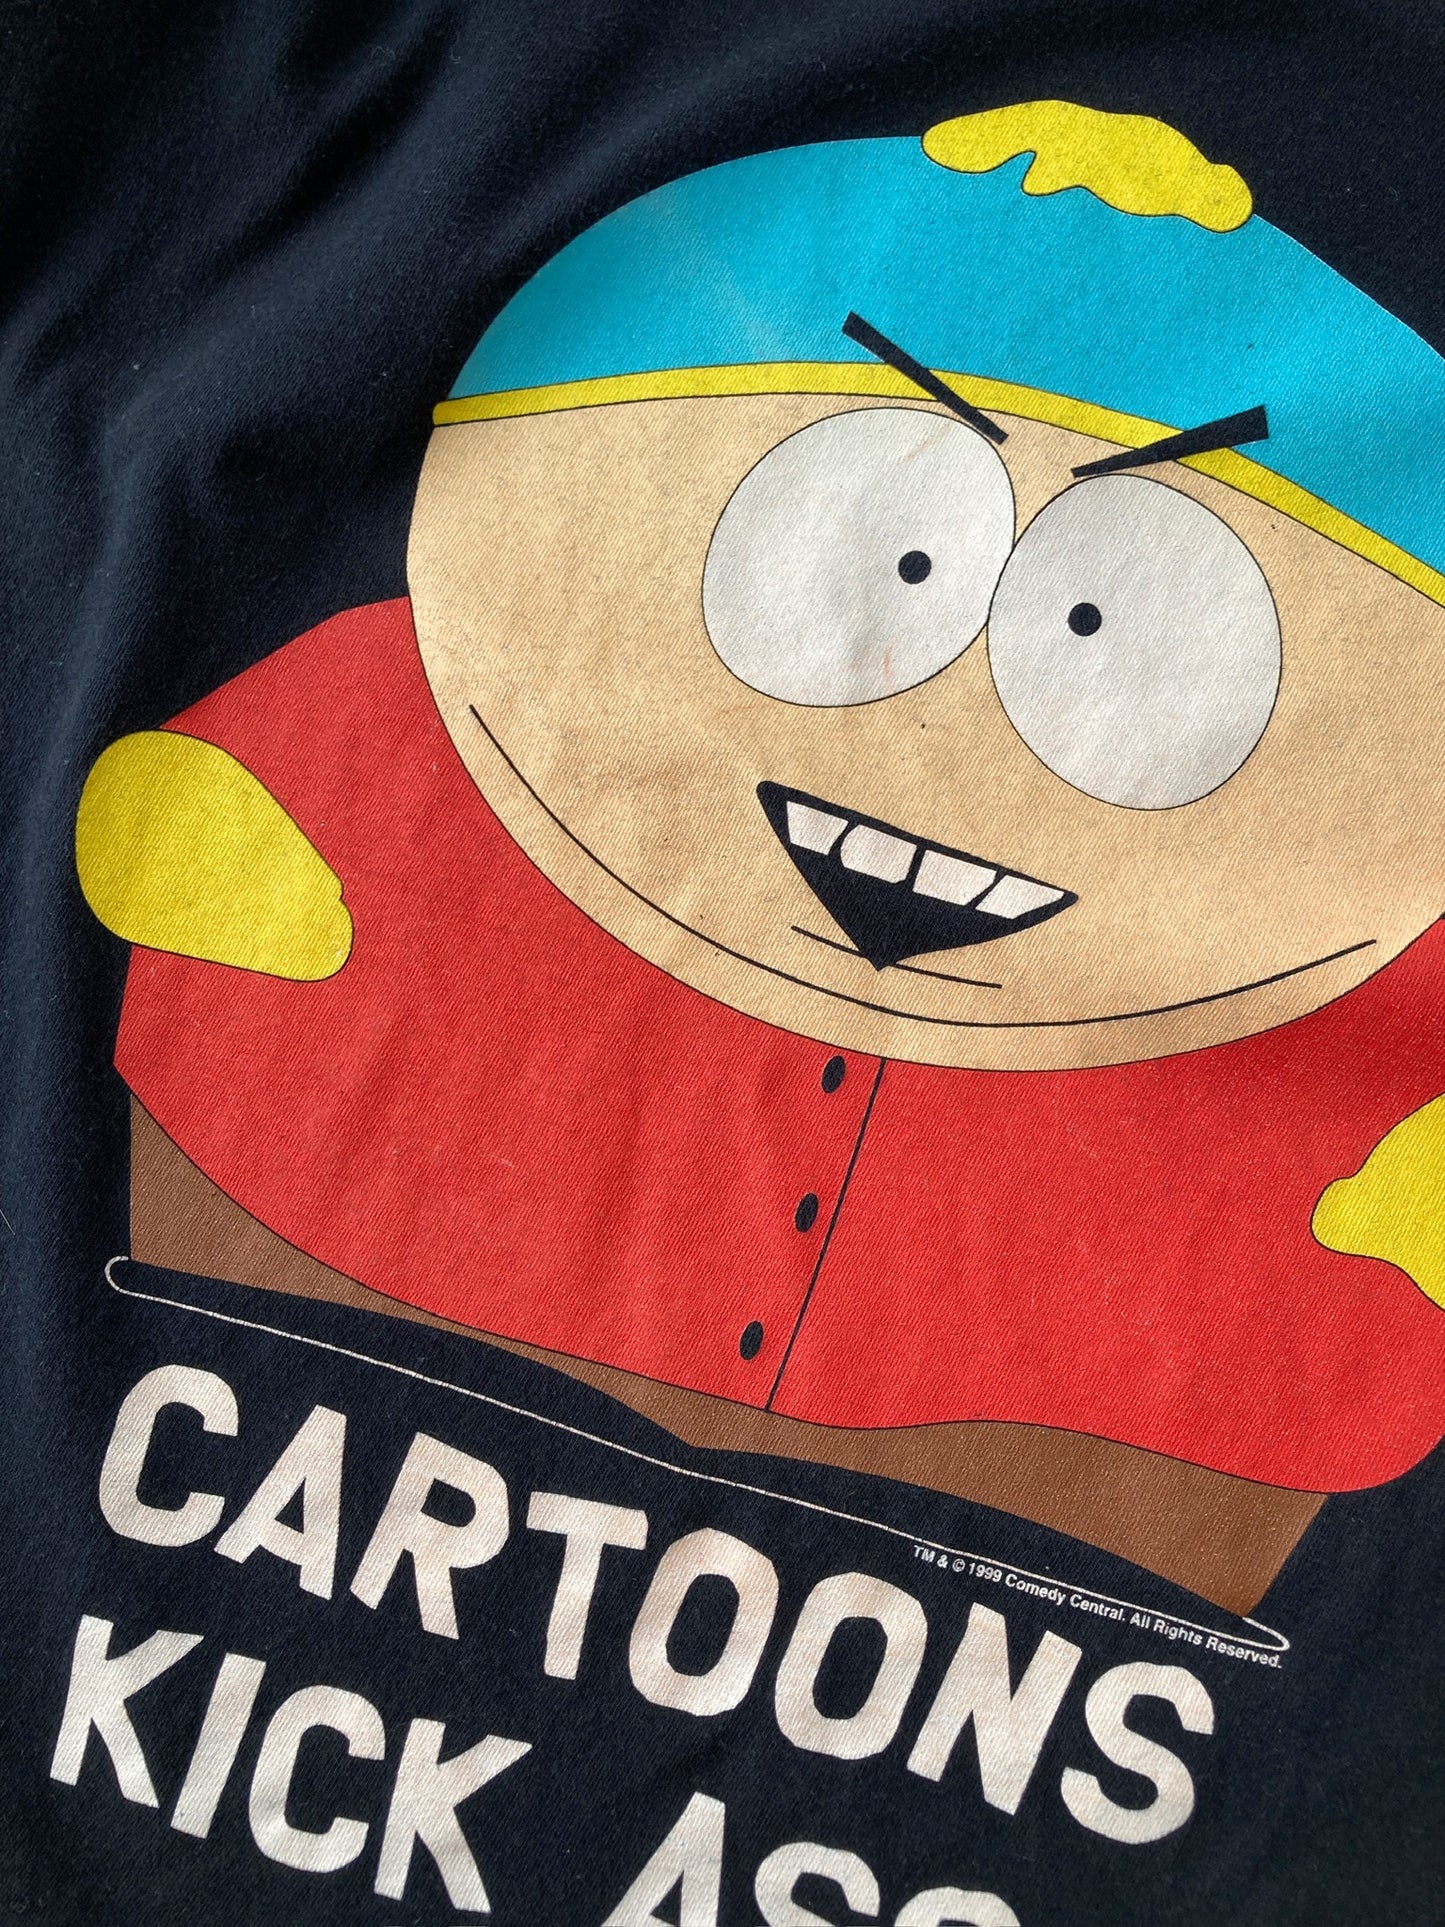 South Park T-Shirt '99 - XL